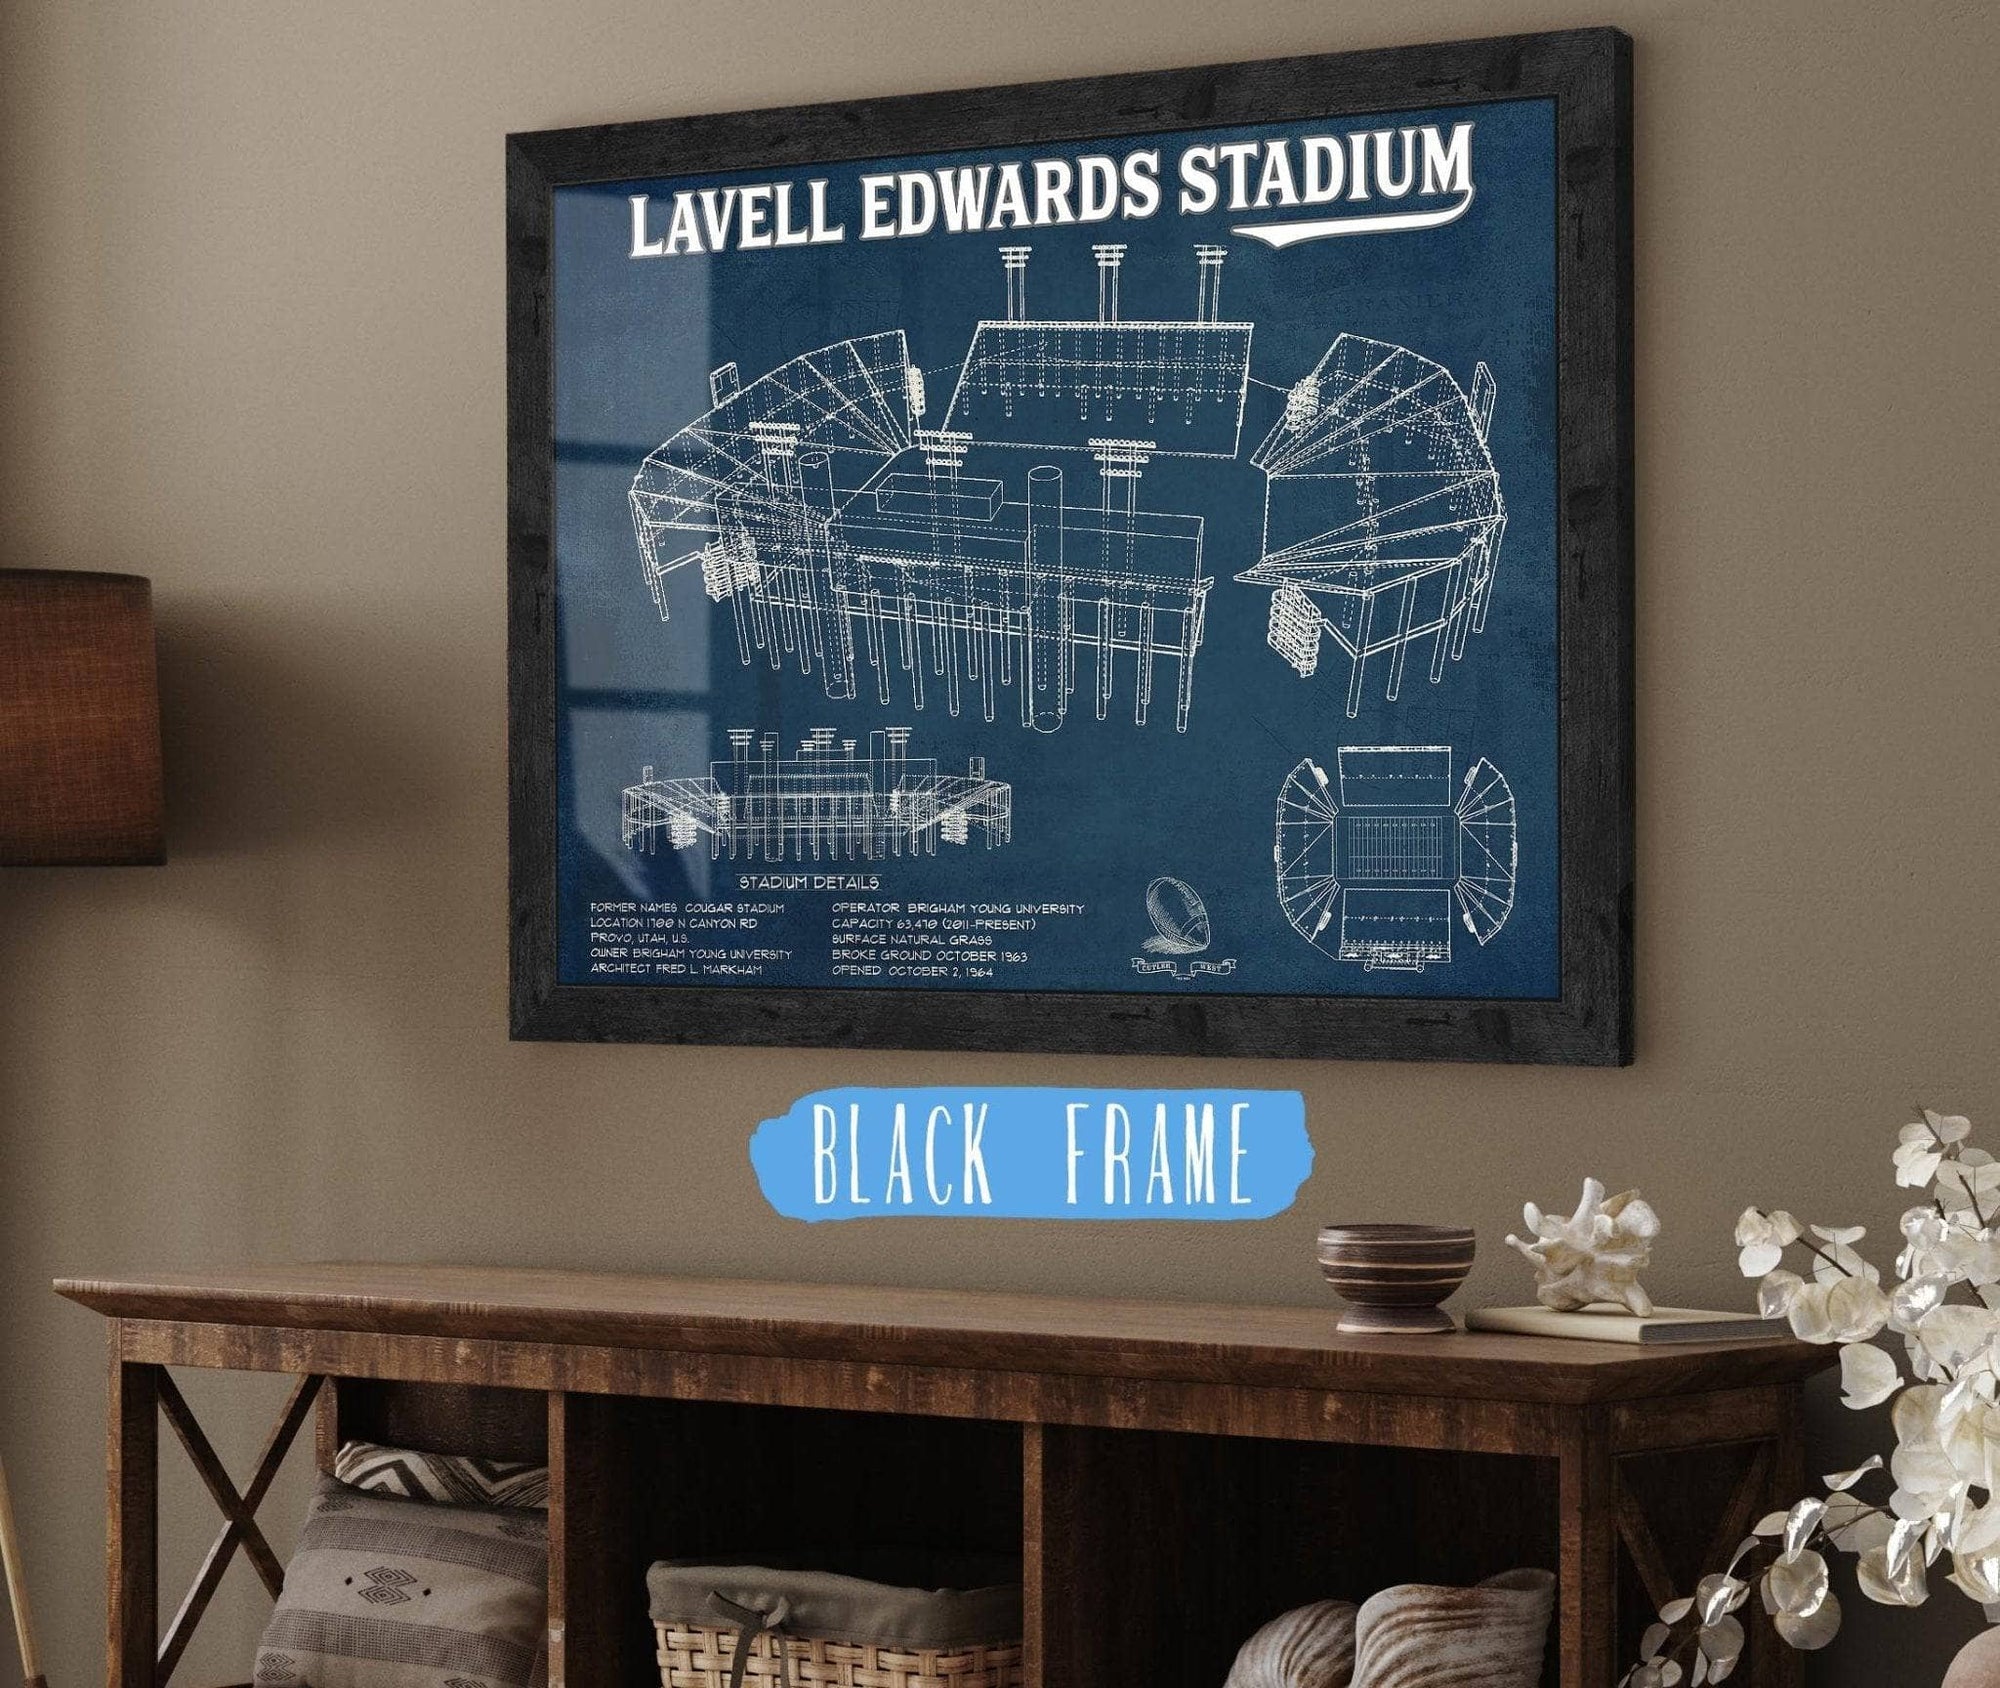 Cutler West College Football Collection 14" x 11" / Black Frame BYU Cougars Stadium Art - Lavell Edwards Vintage Stadium & Blueprint Art Print 639921146_45702